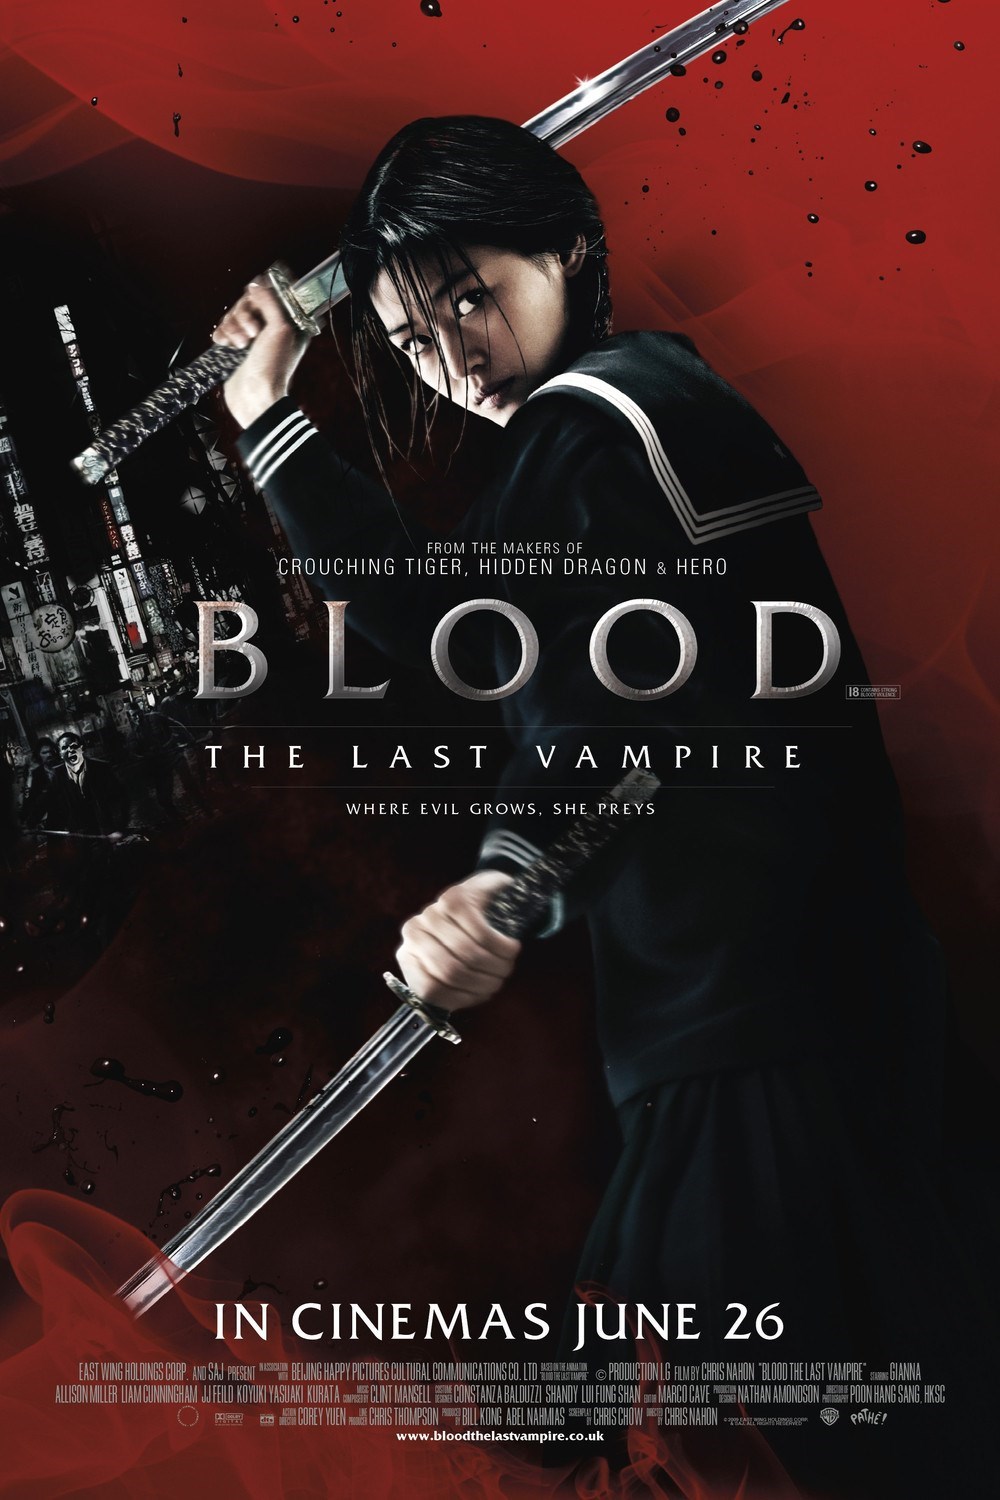 Blood: The Last Vampire - Wikipedia